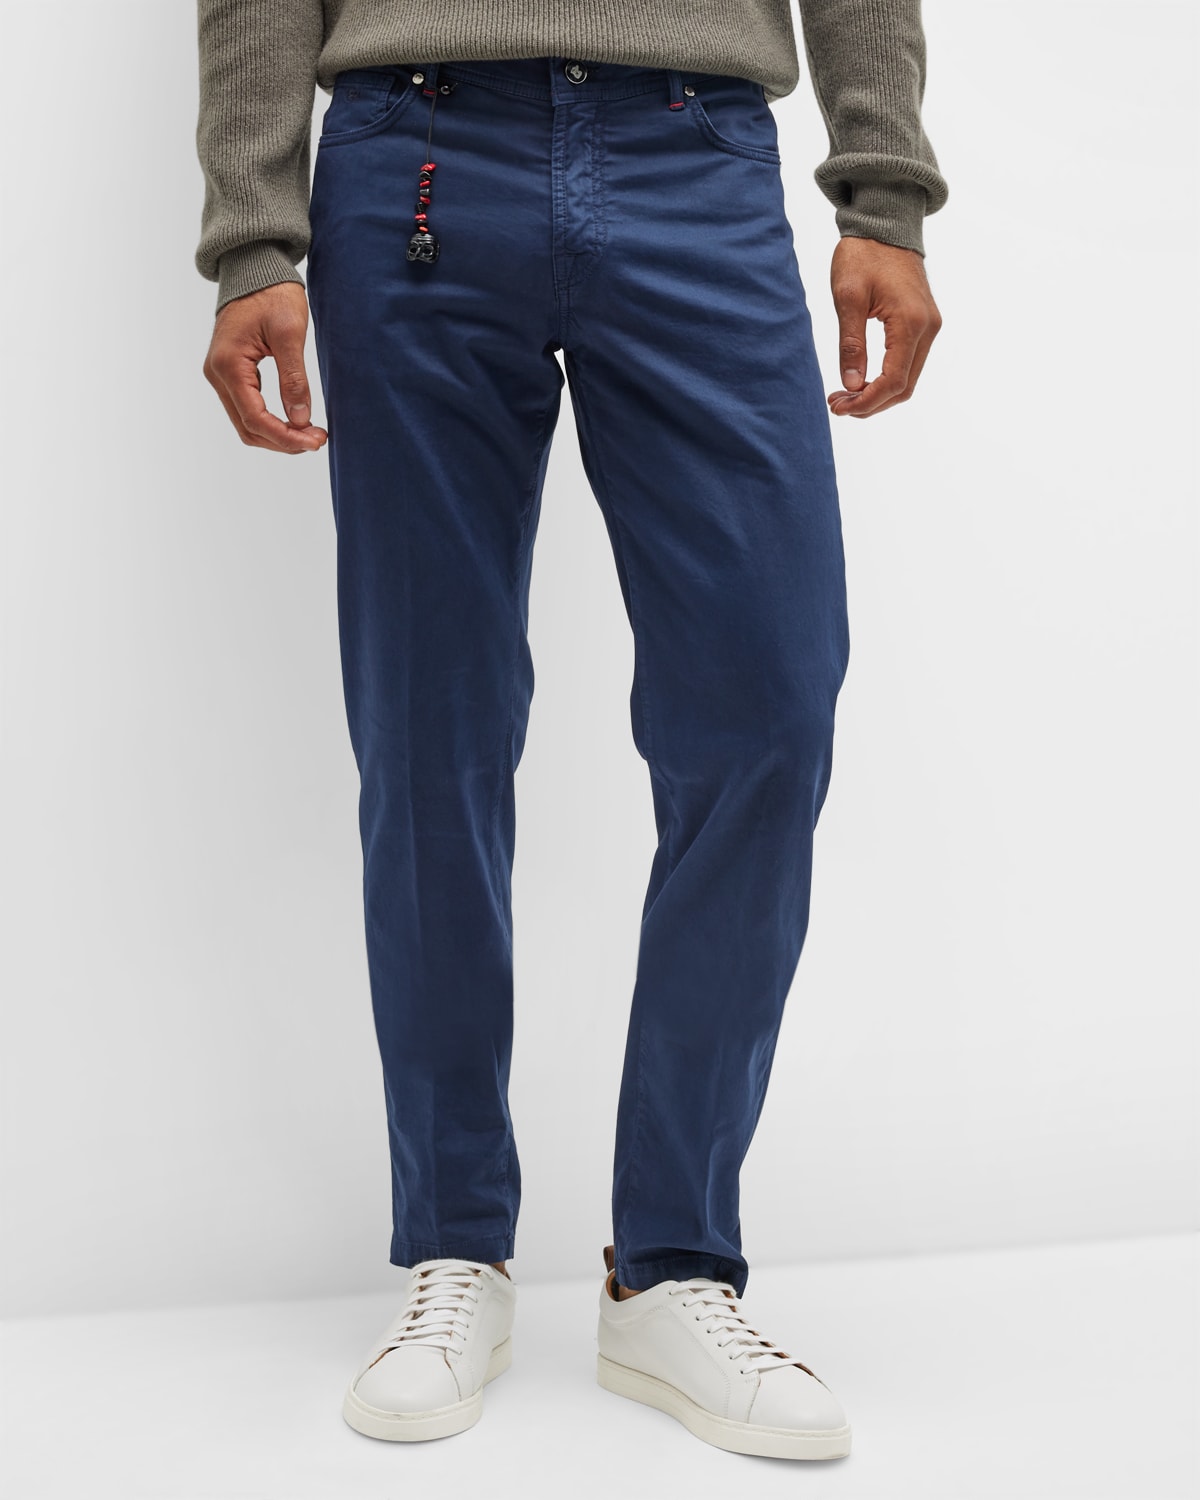 Marco Pescarolo Men's Supima Cotton 5-Pocket Pants